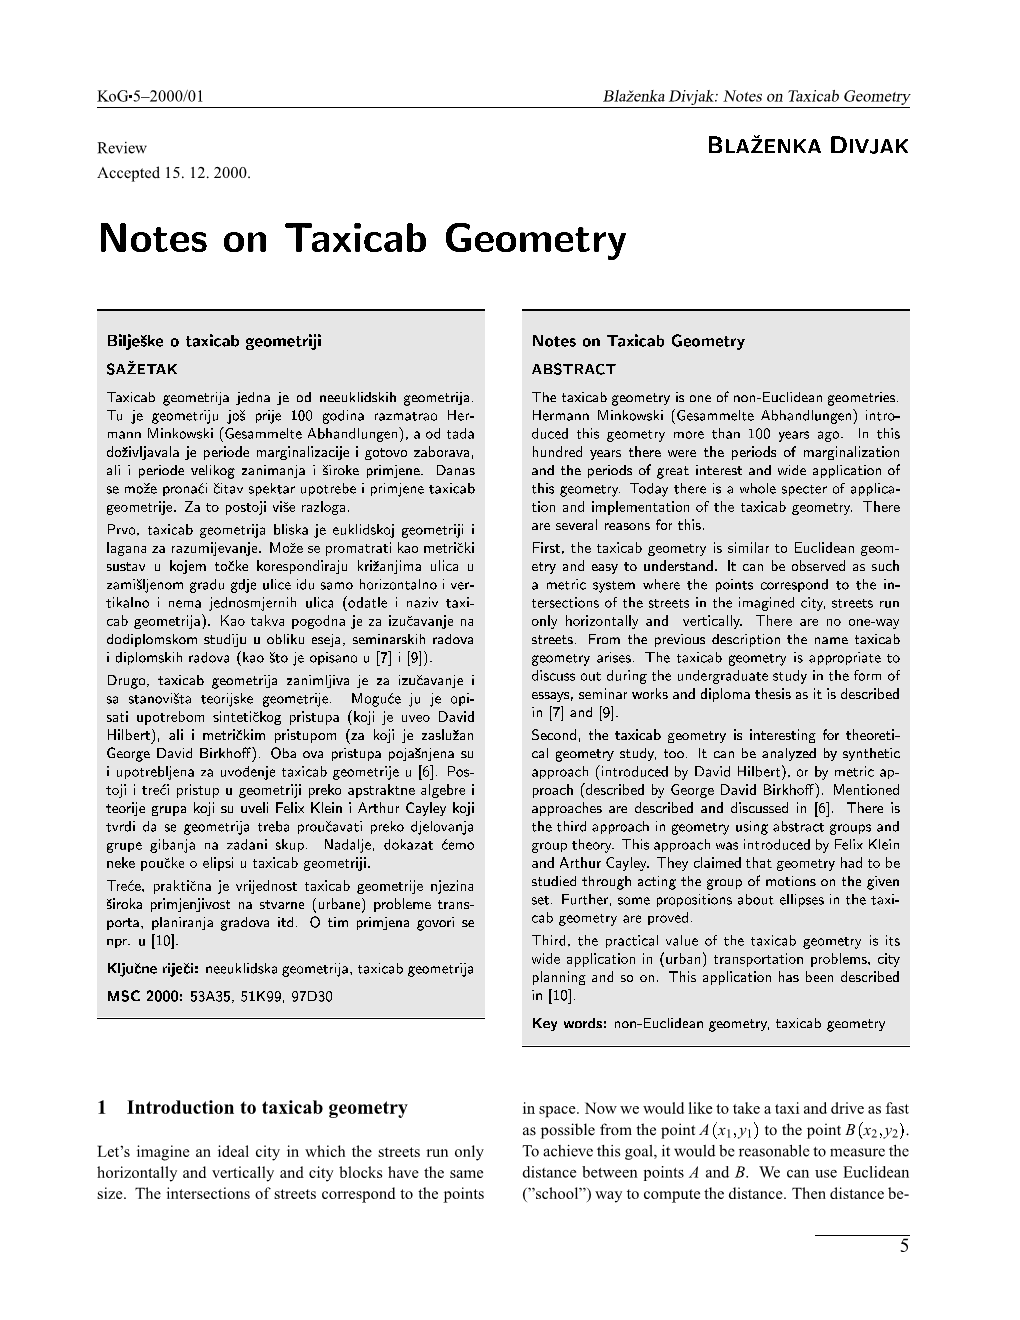 Blazenka Divjak: Notes on Taxicab Geometry